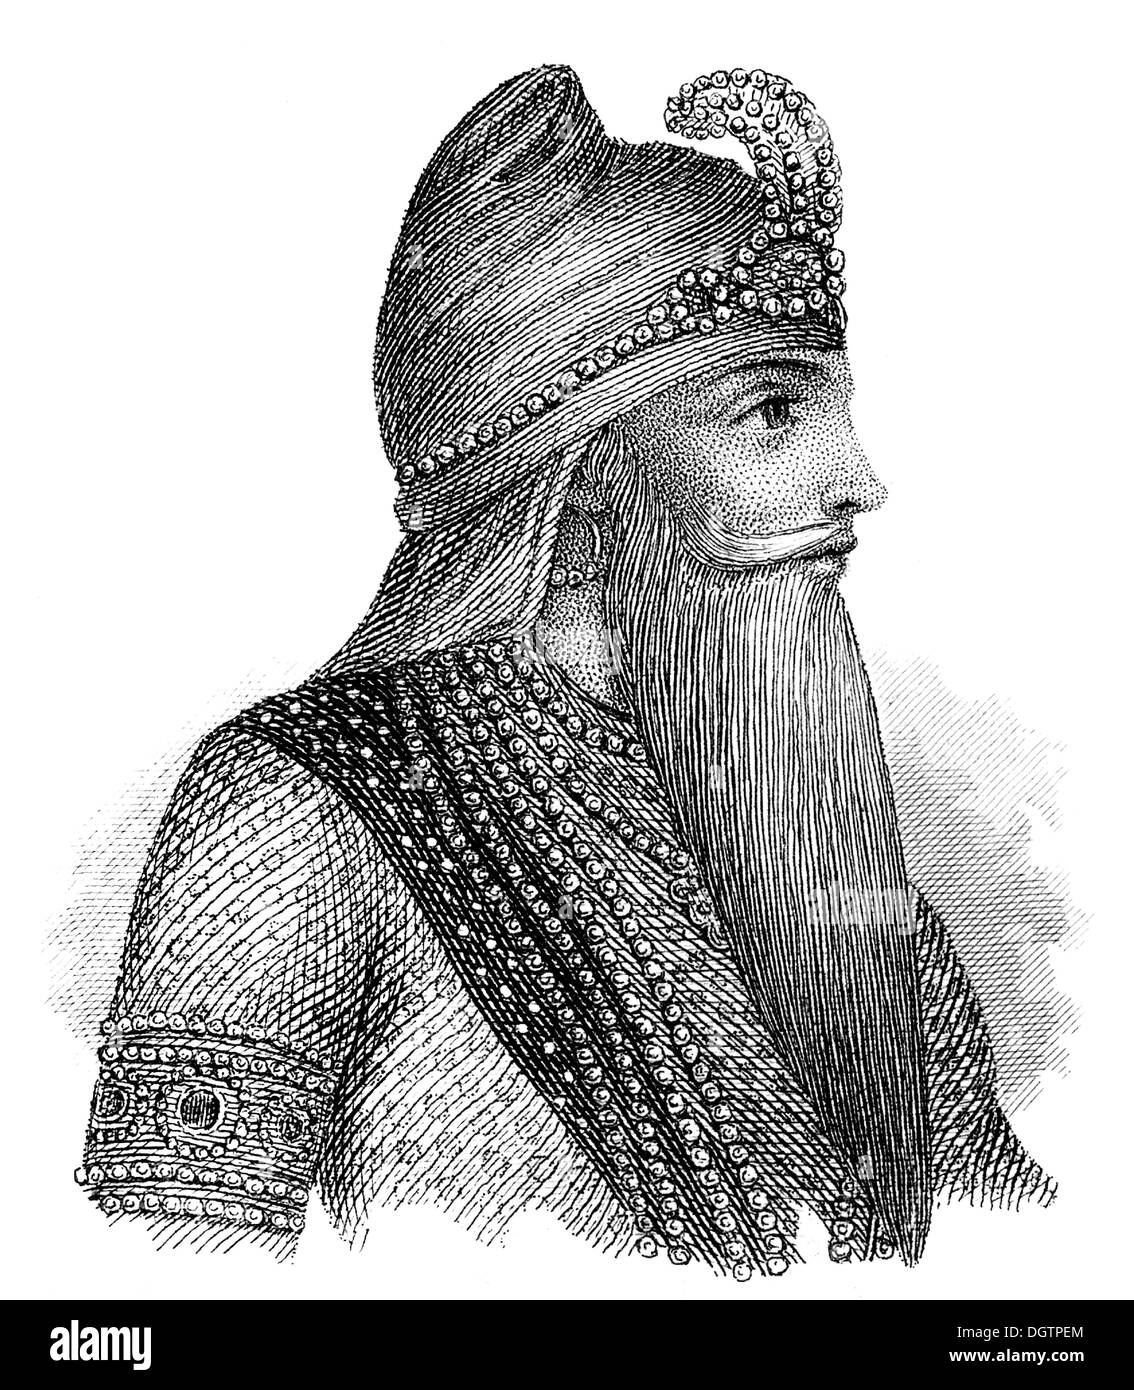 Maharaja Ranjit Singh by PenTacularArtist on DeviantArt